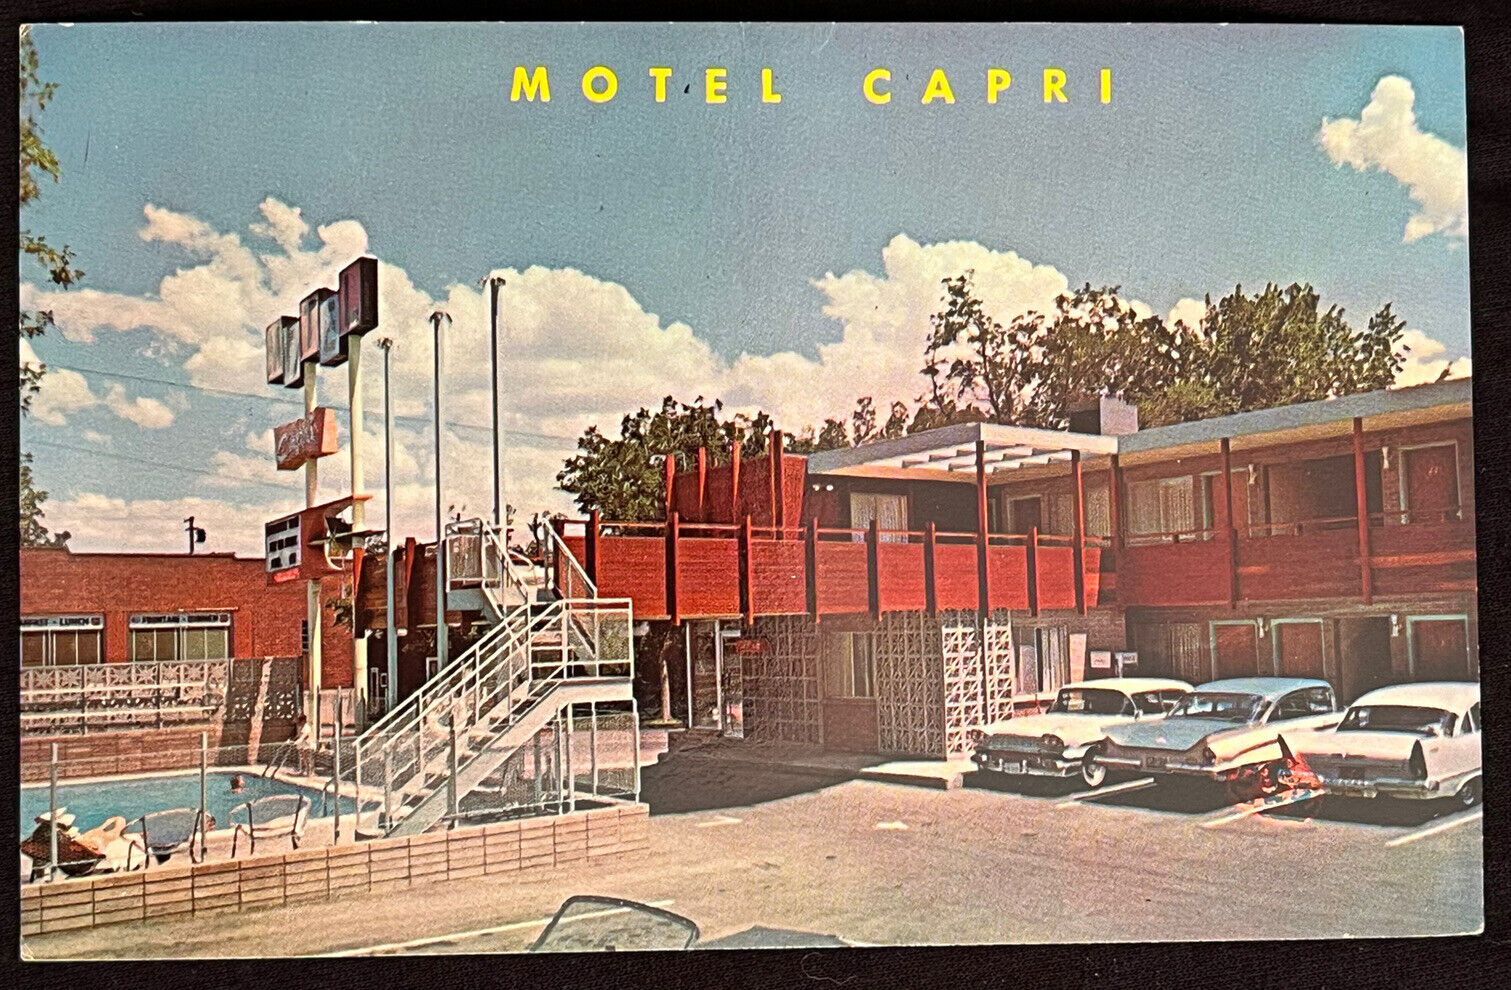 Reno Roadside Motel Capri Swimming Pool Old Cars Nevada Vintage Postcard c1950